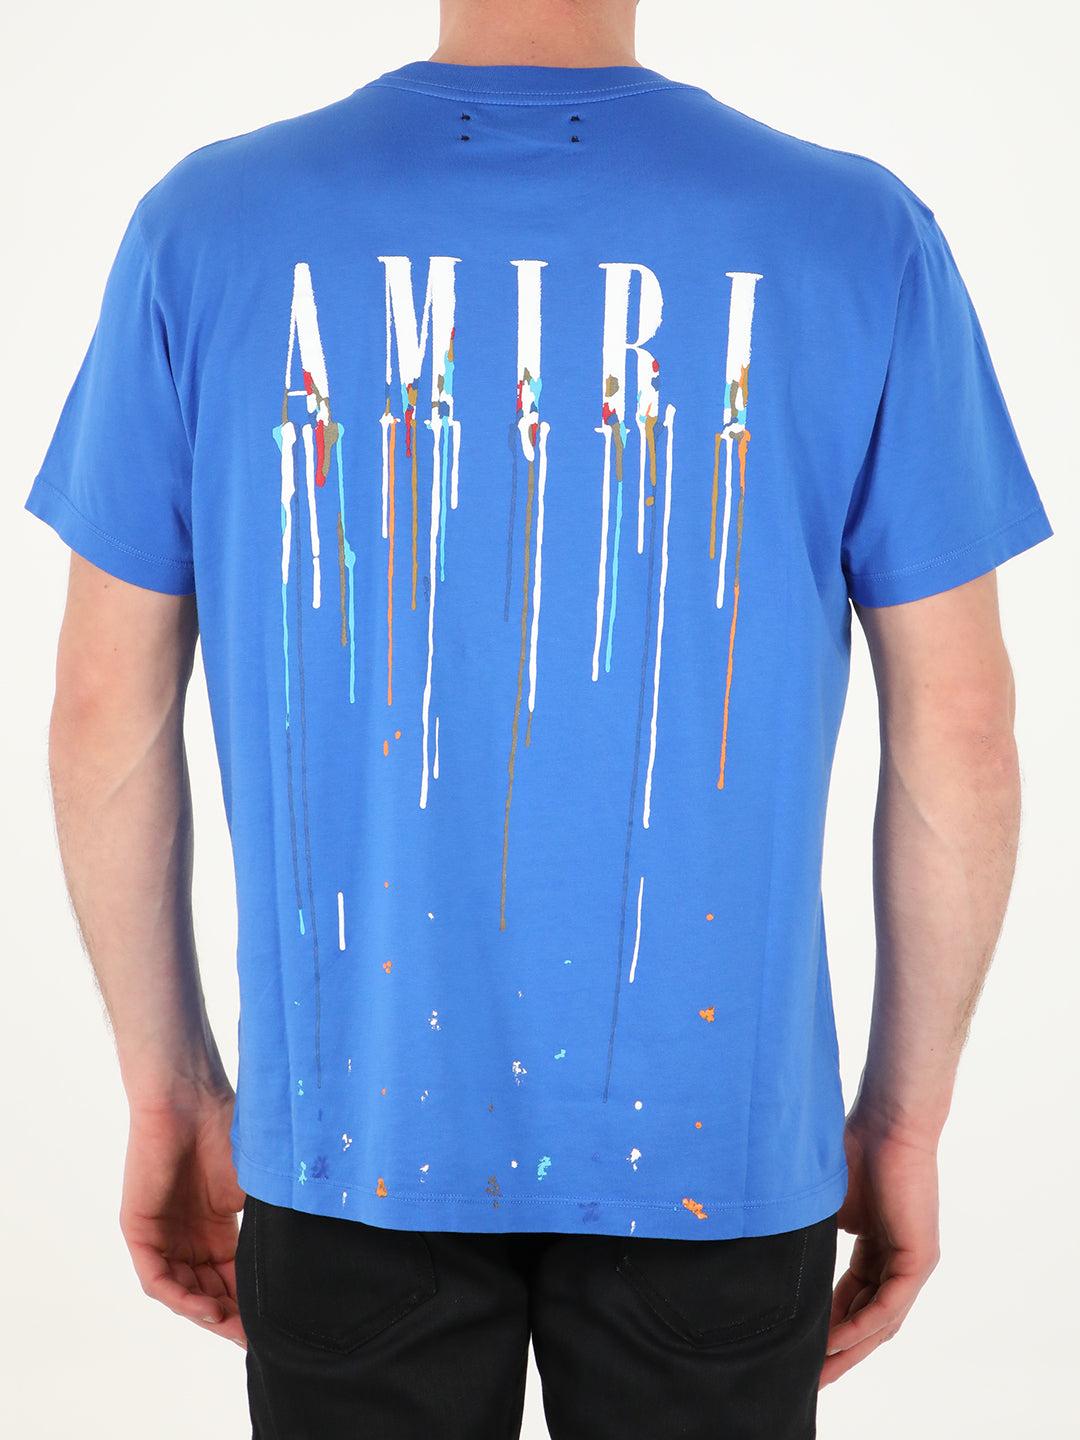 Amiri Paint Drip Blue T-shirt for Men